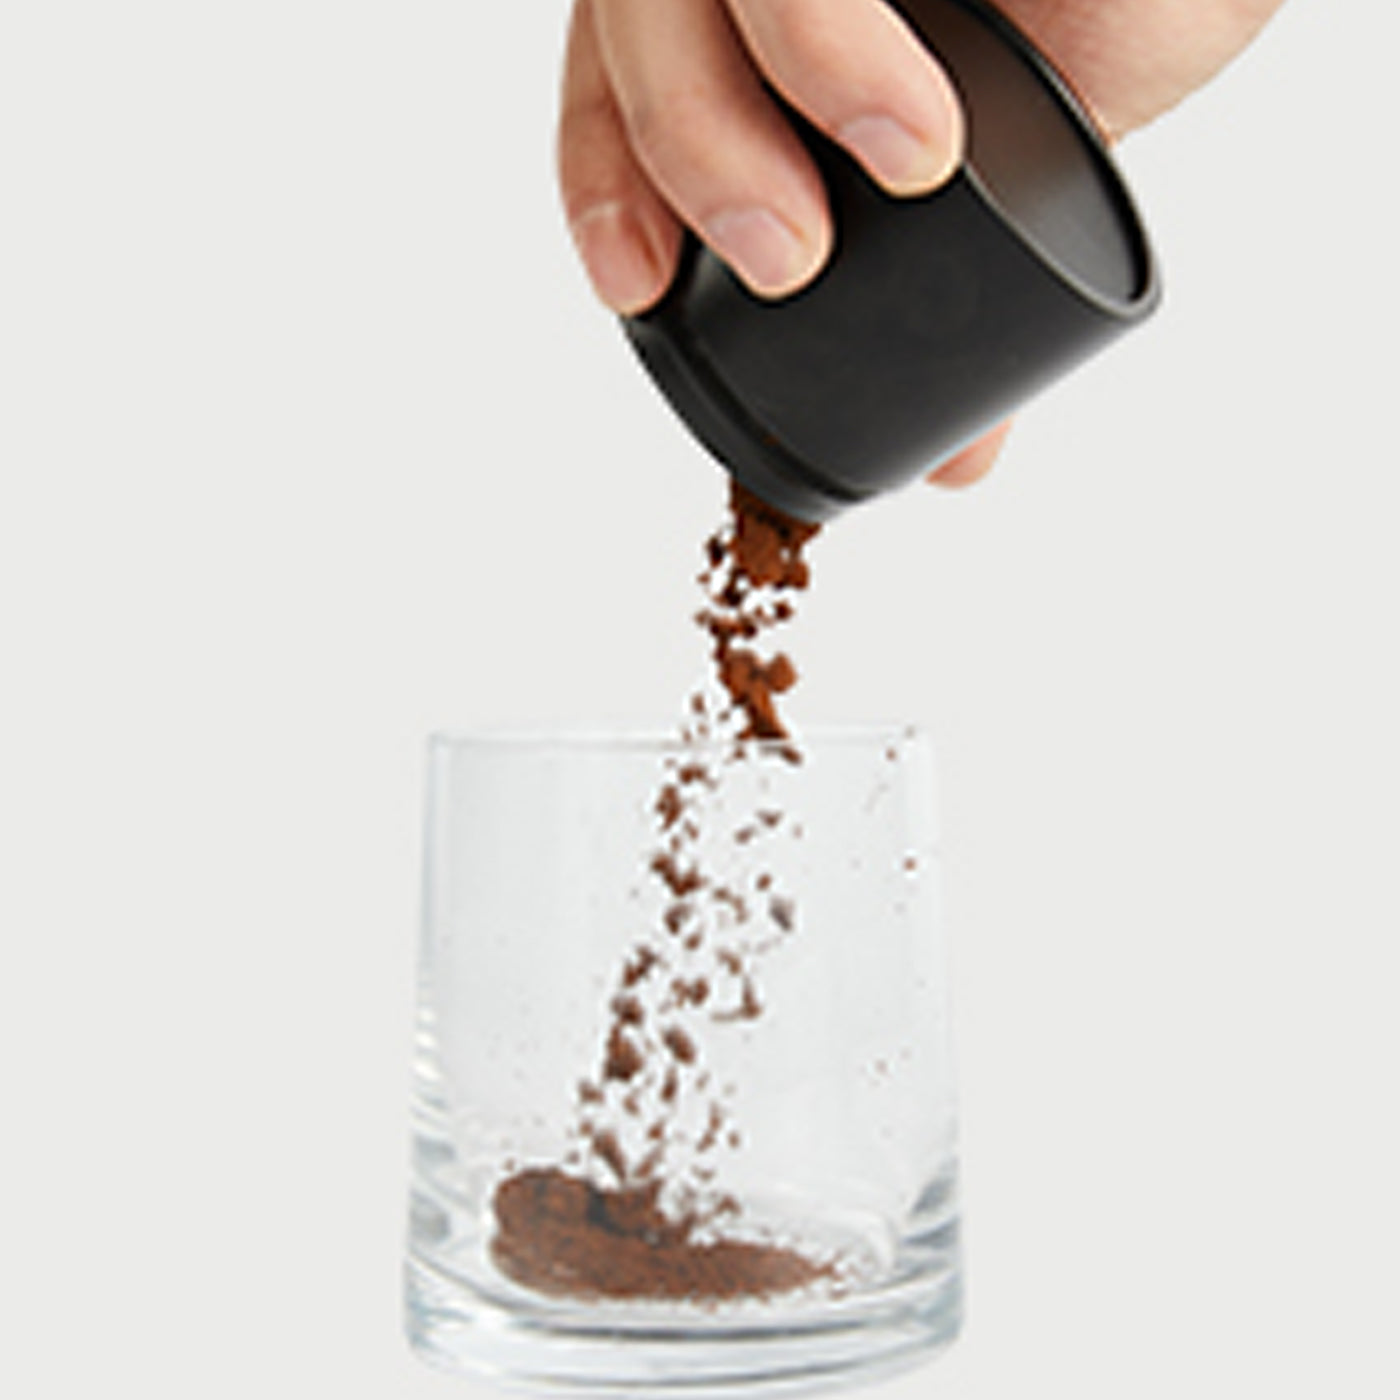 Burr Hand Coffee Grinder  Stainless Steel Portable – Black Powder Coffee